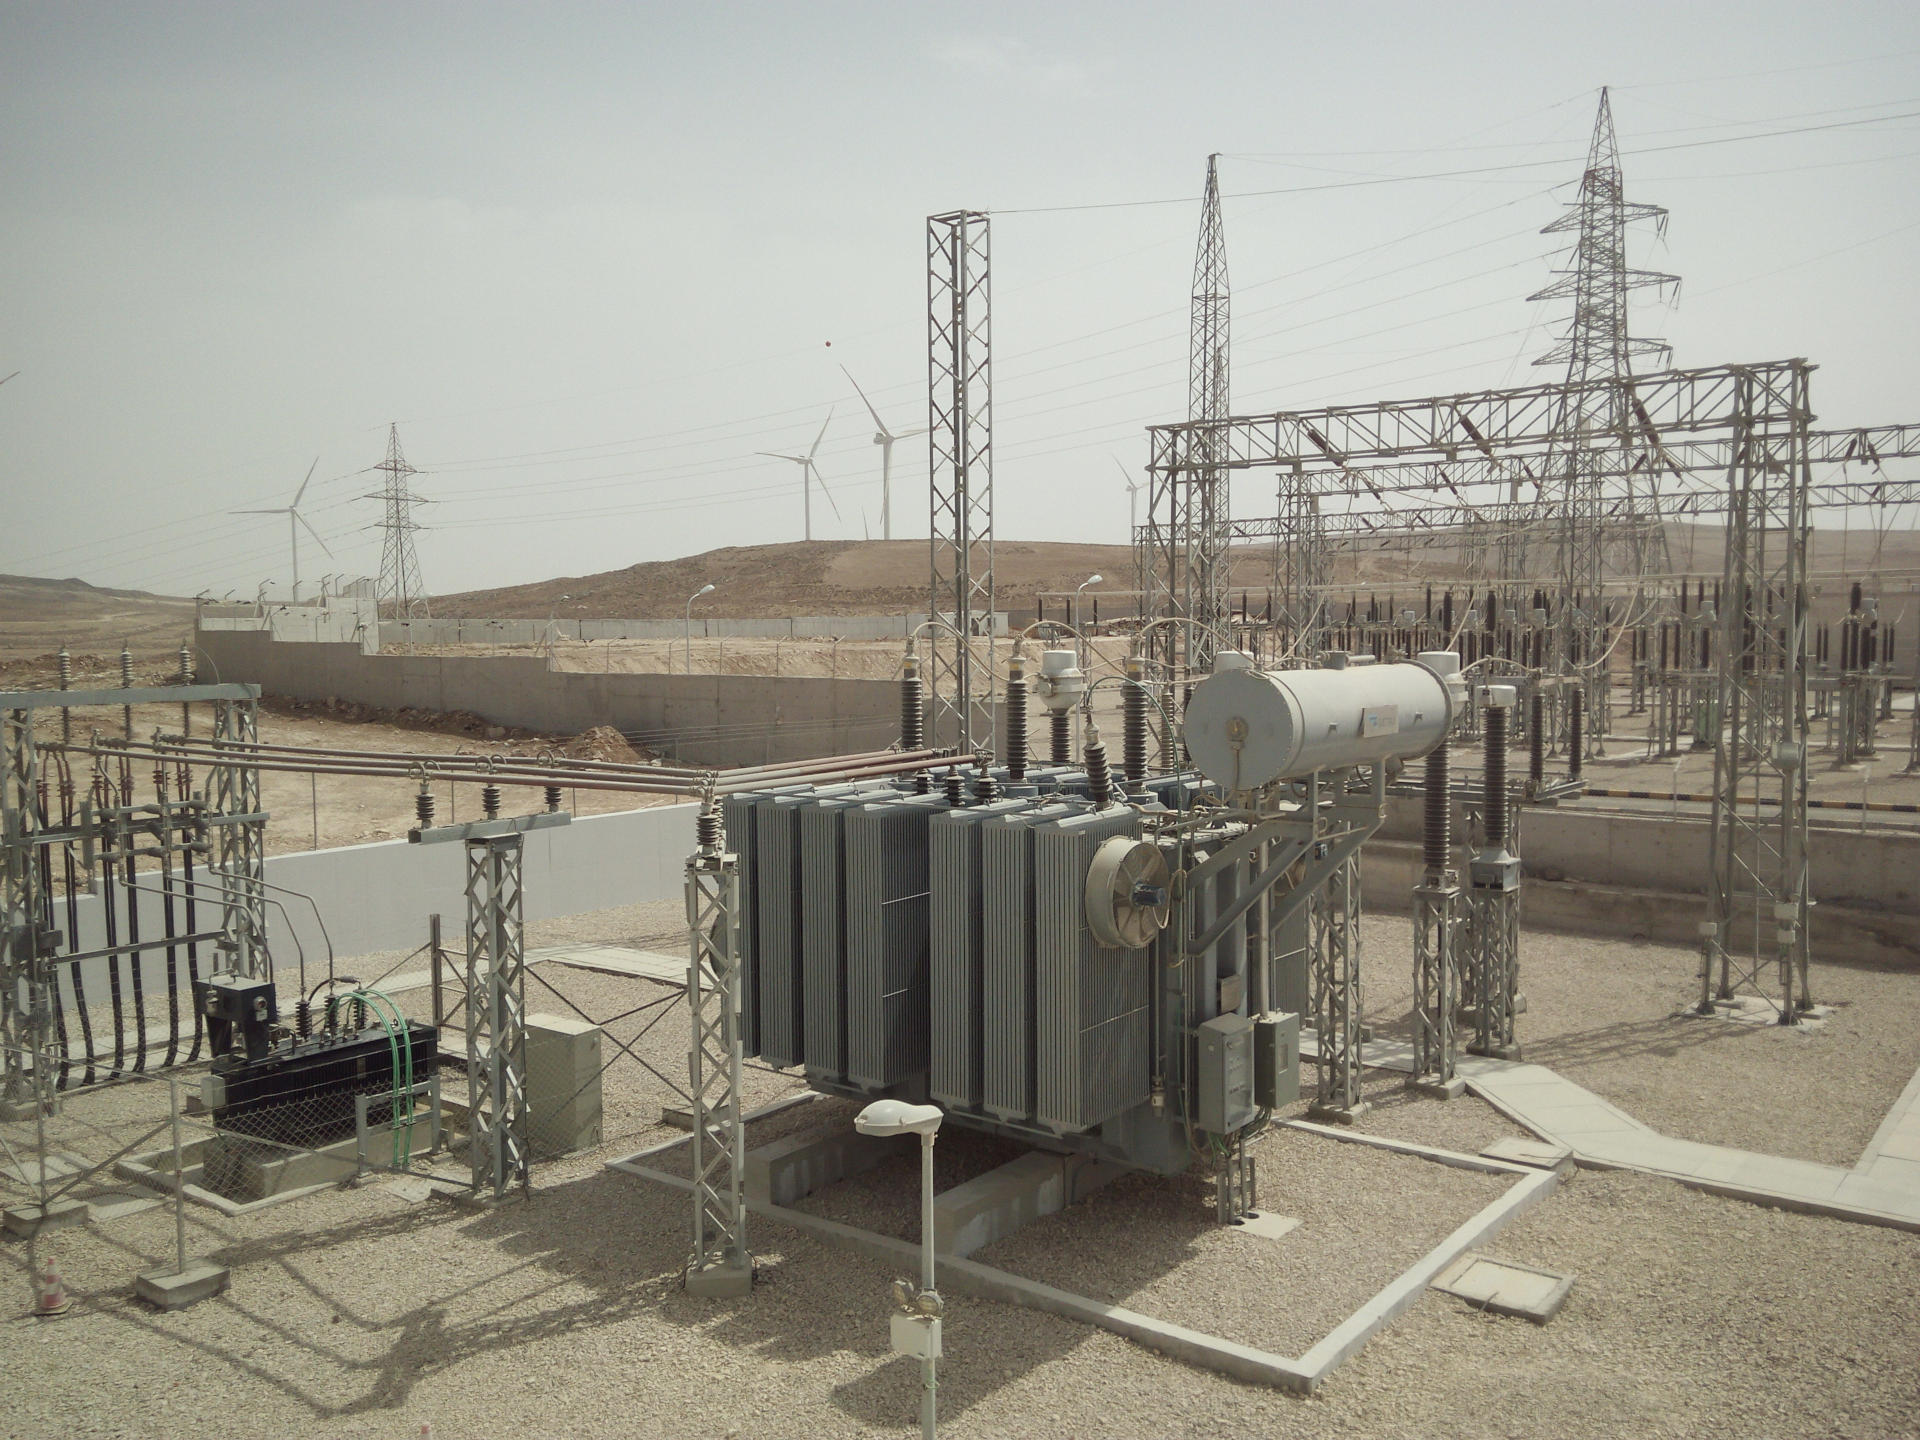 Parque eólico Al Tafila 117 MW